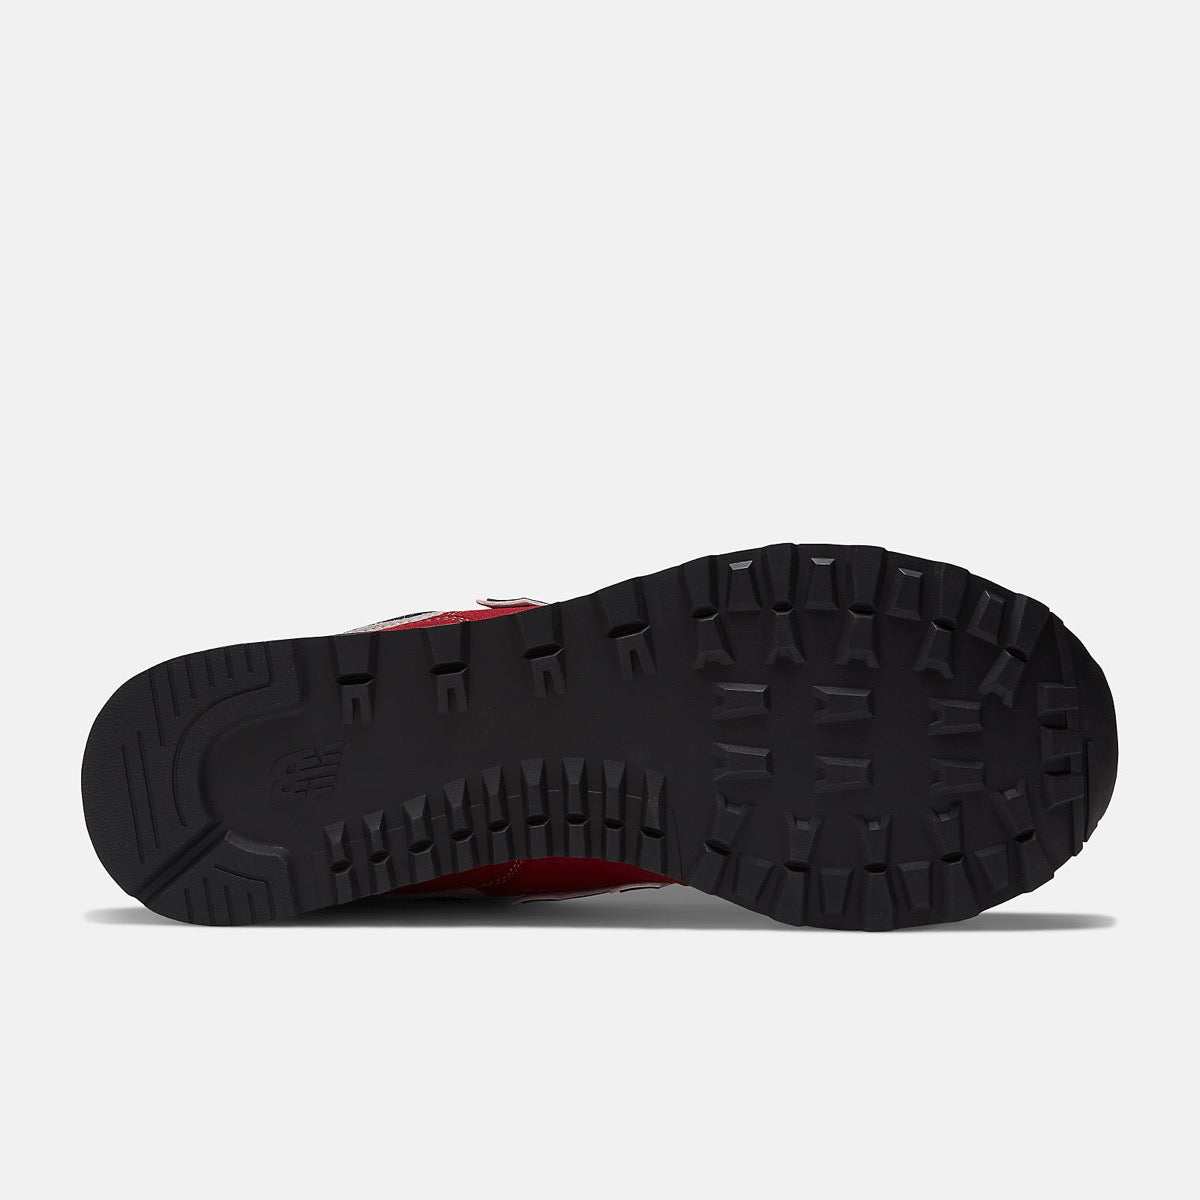 Scarpe Uomo NEW BALANCE Sneakers 574 in Mesh e Suede colore Red e Navy